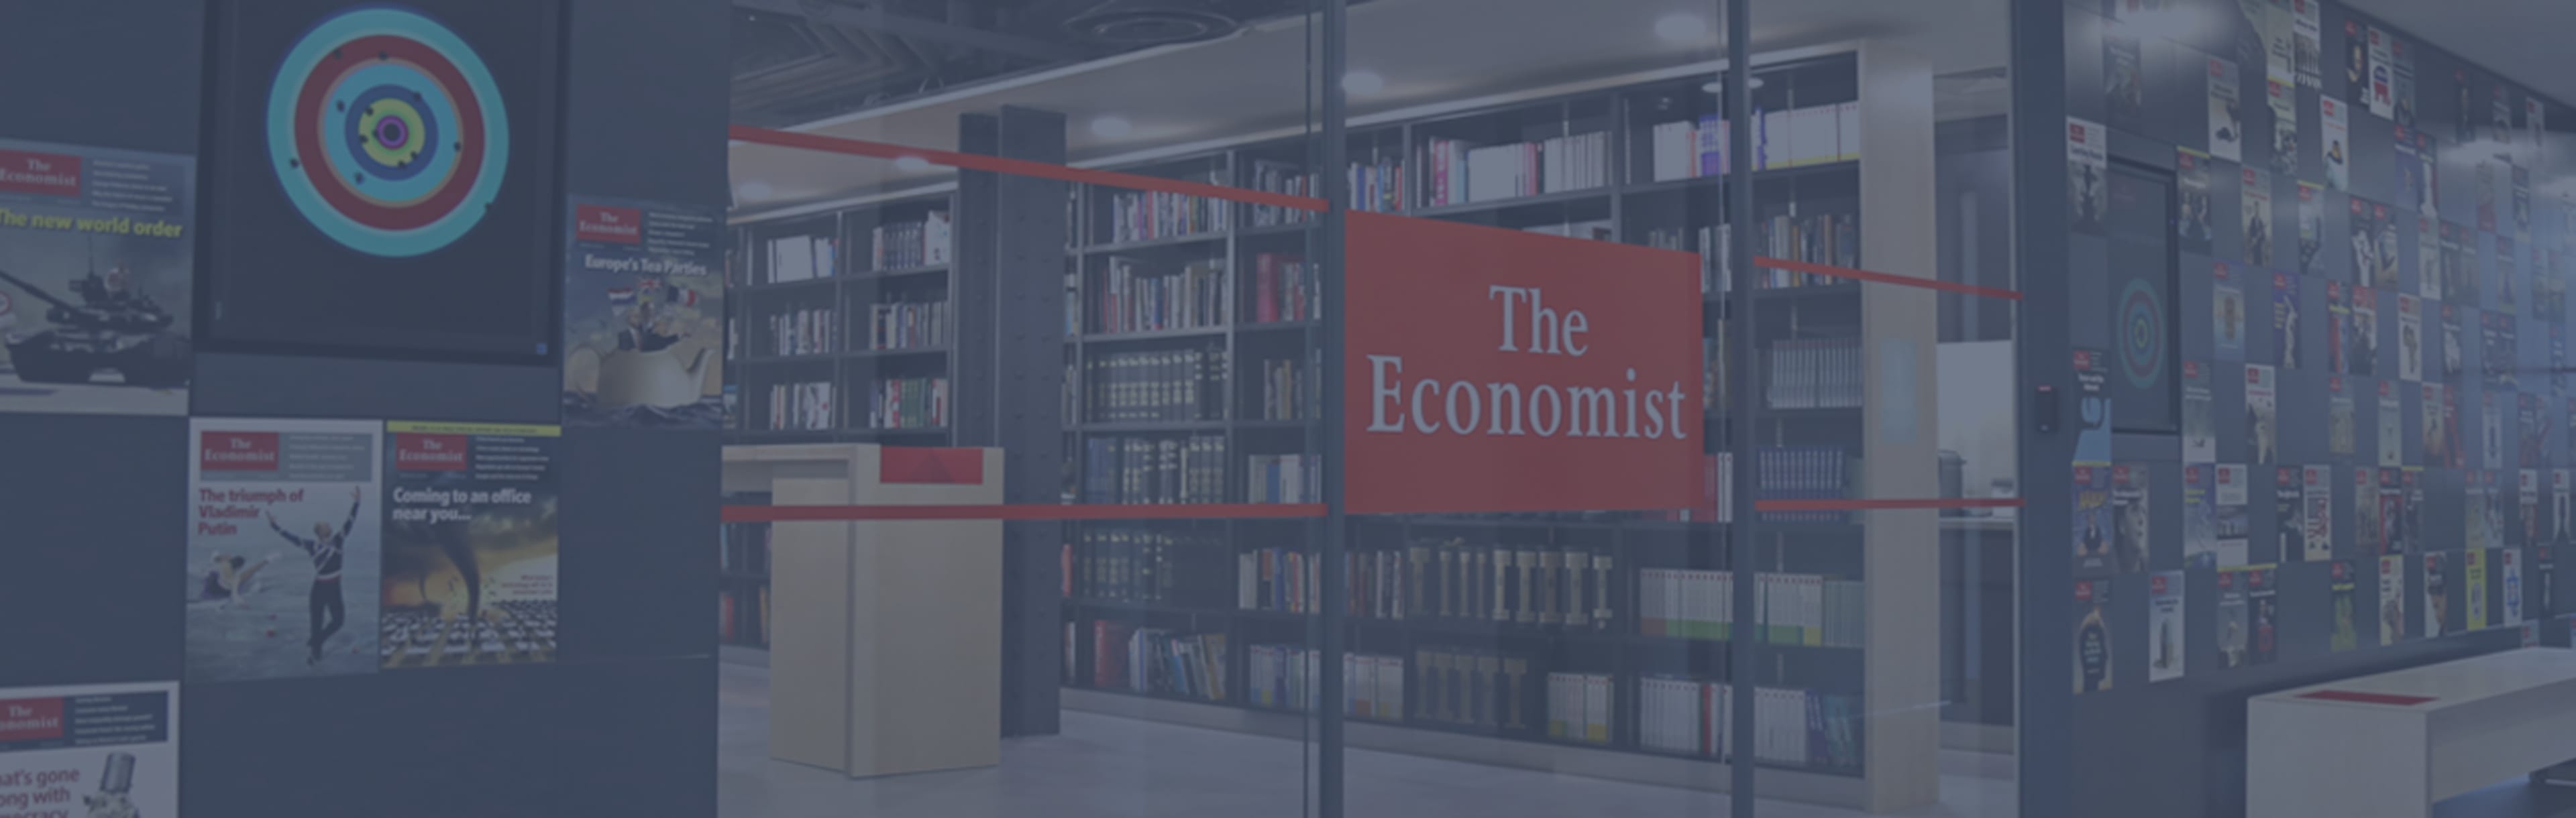 The Economist - Executive Education